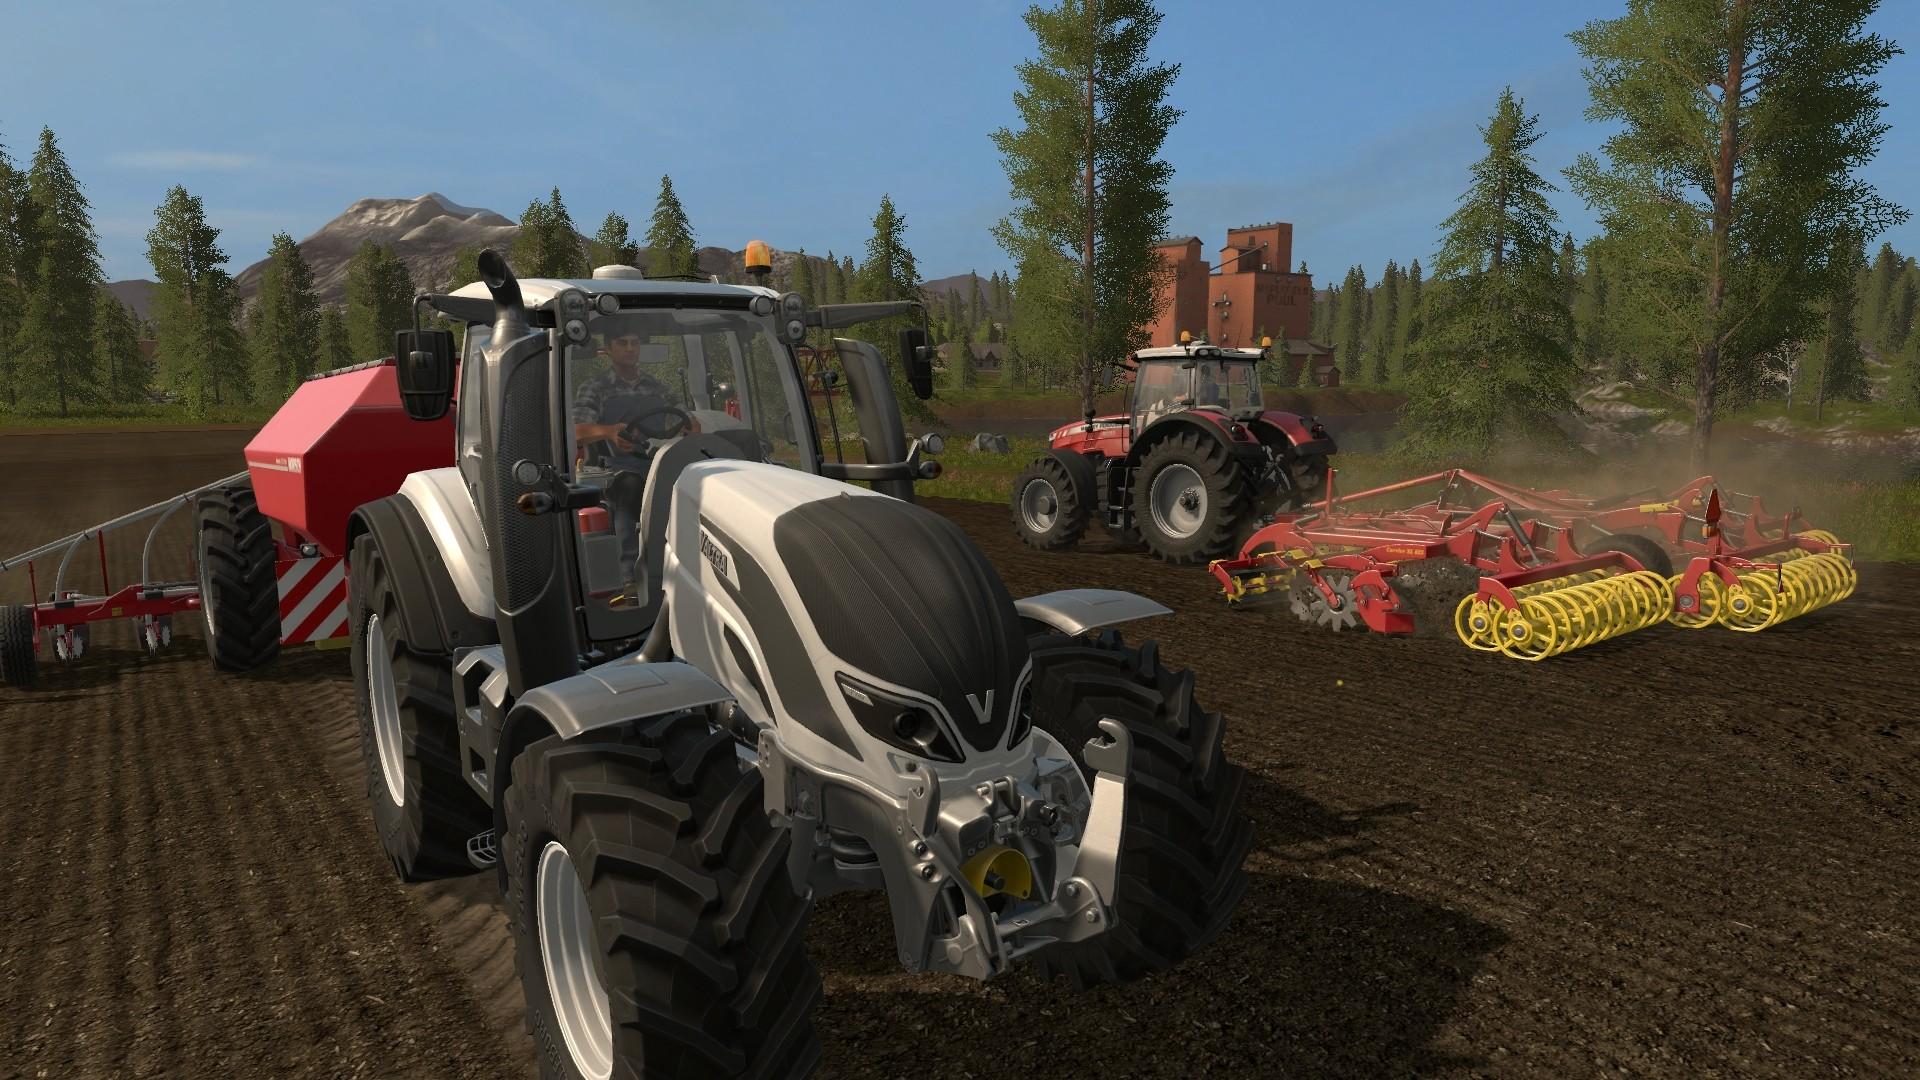 Buy Farming Simulator 19 Steam